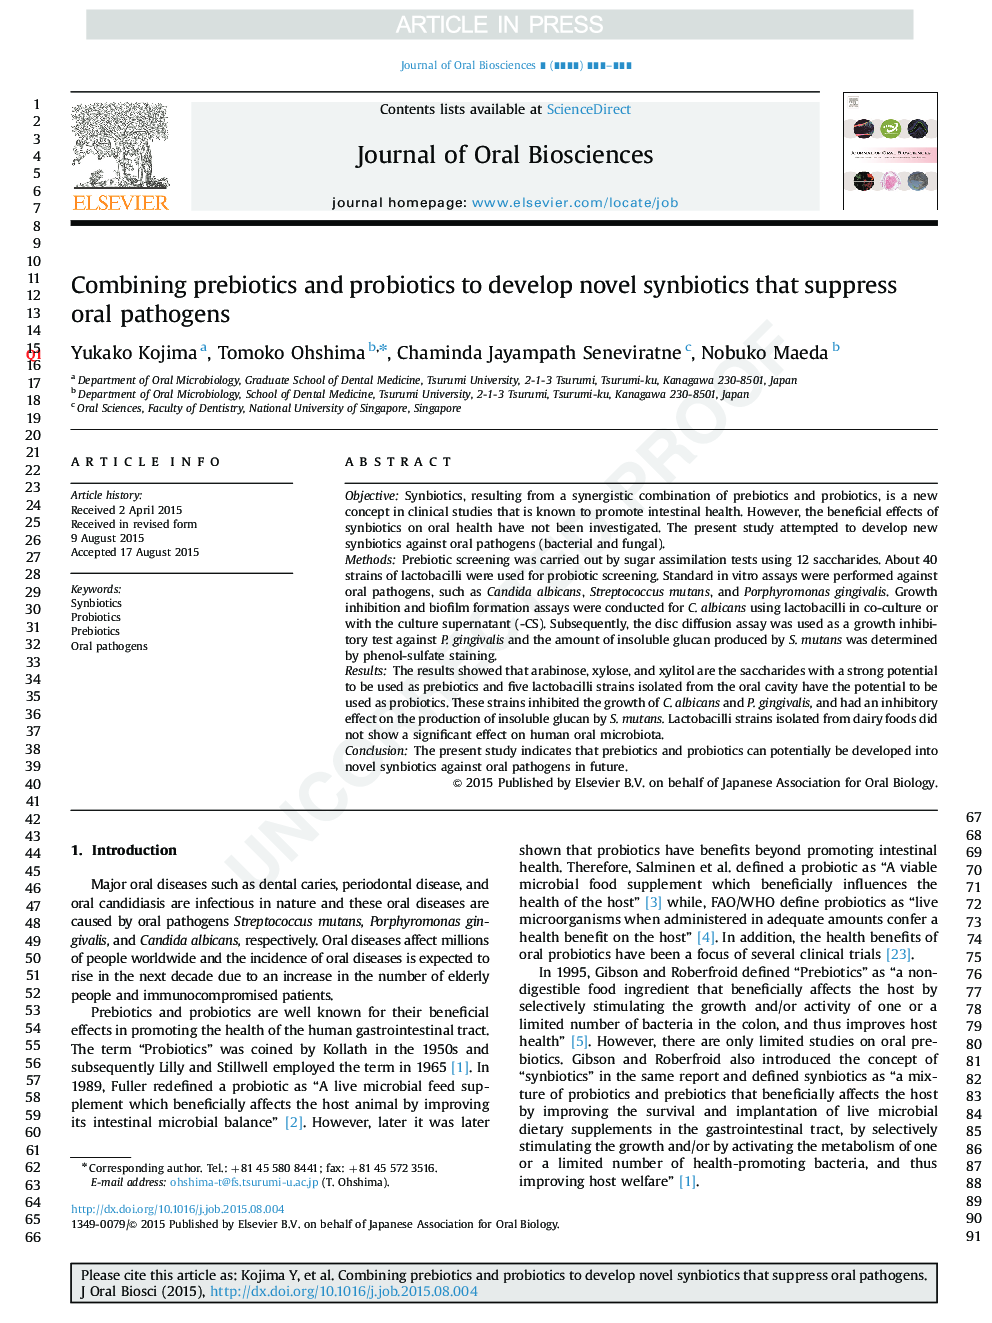 Combining prebiotics and probiotics to develop novel synbiotics that suppress oral pathogens